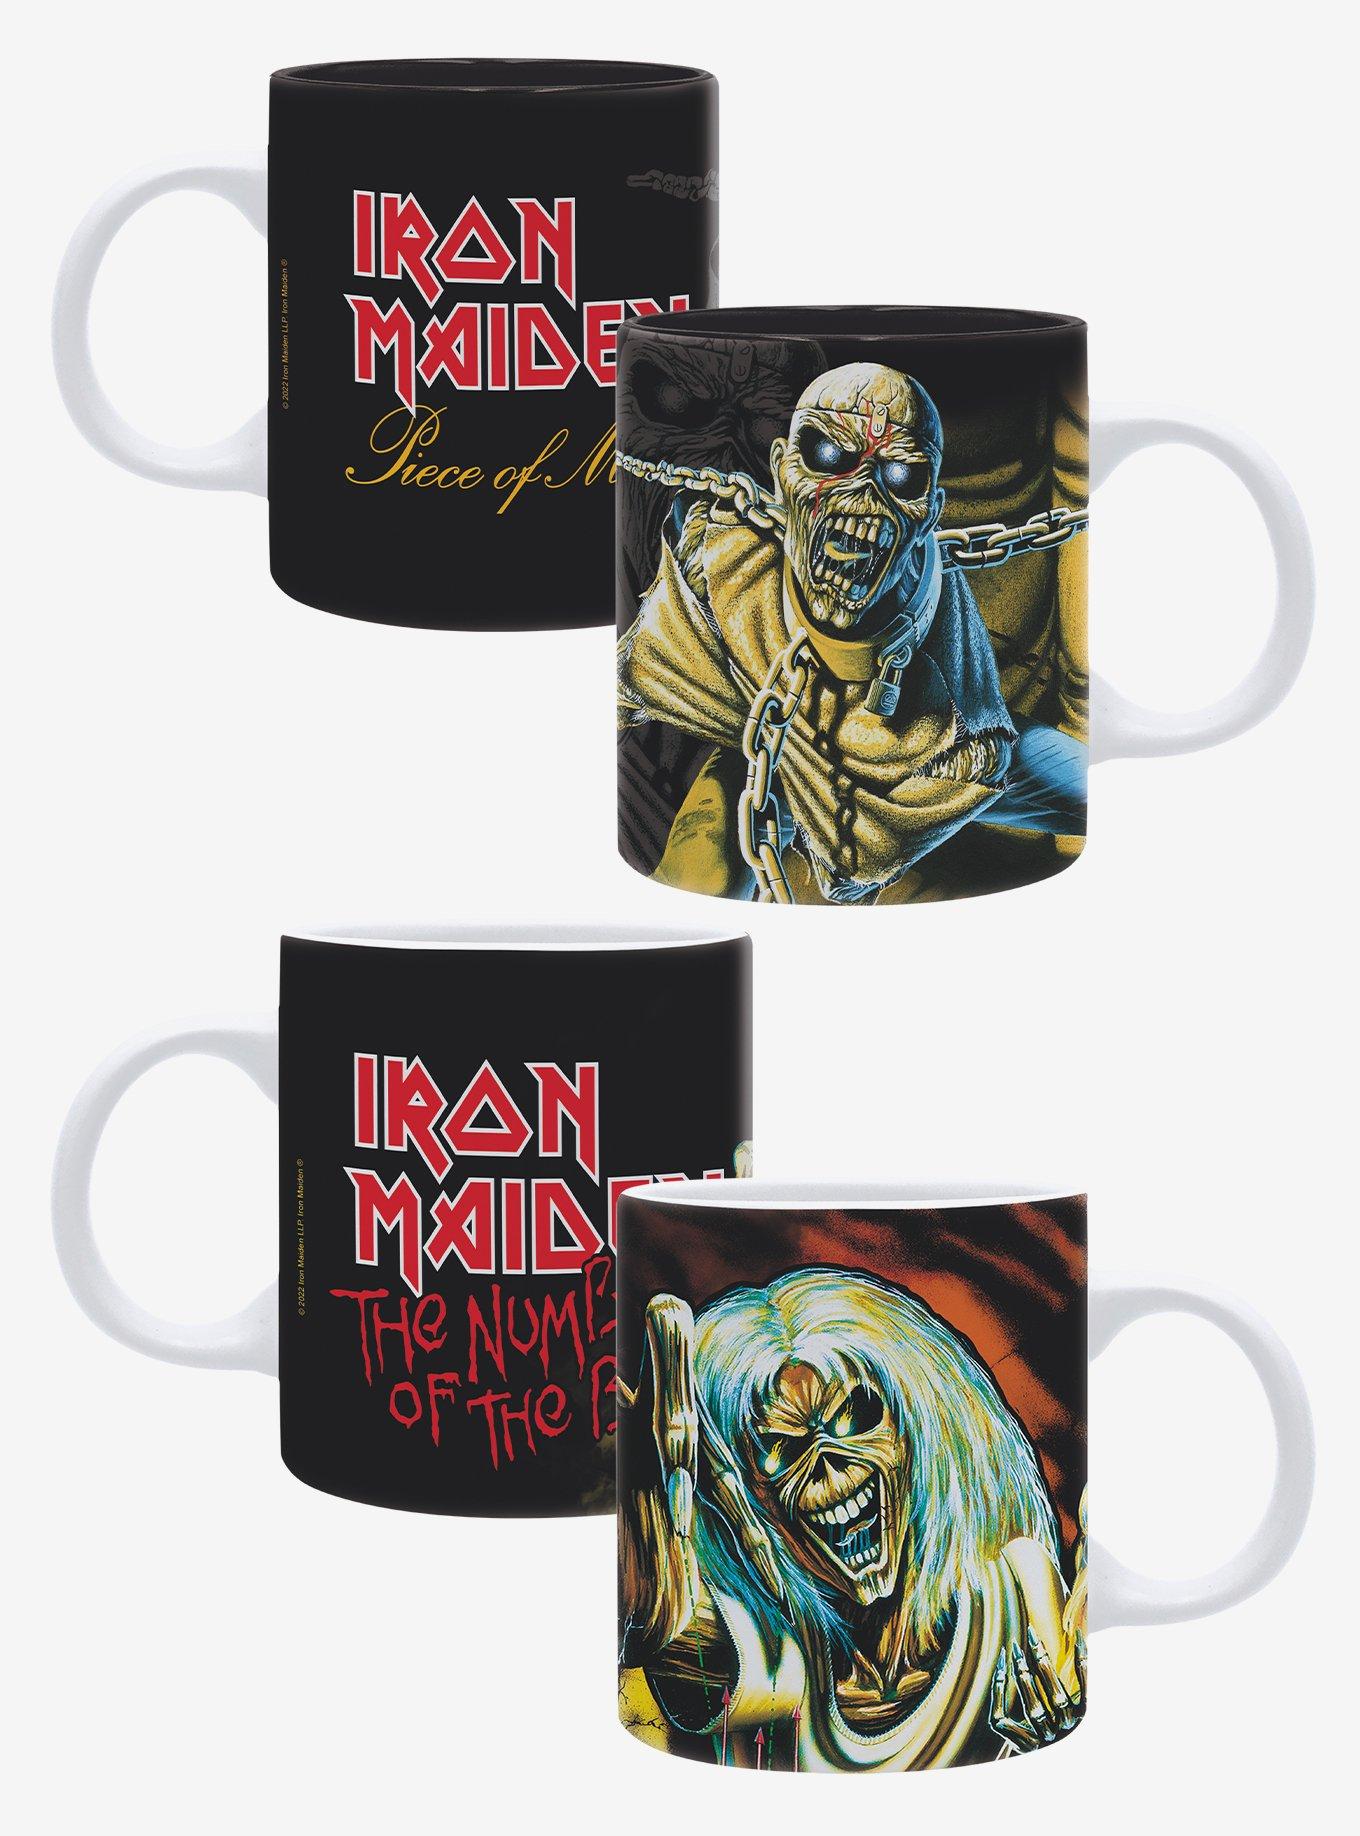 Iron Maiden Mug Set | Hot Topic